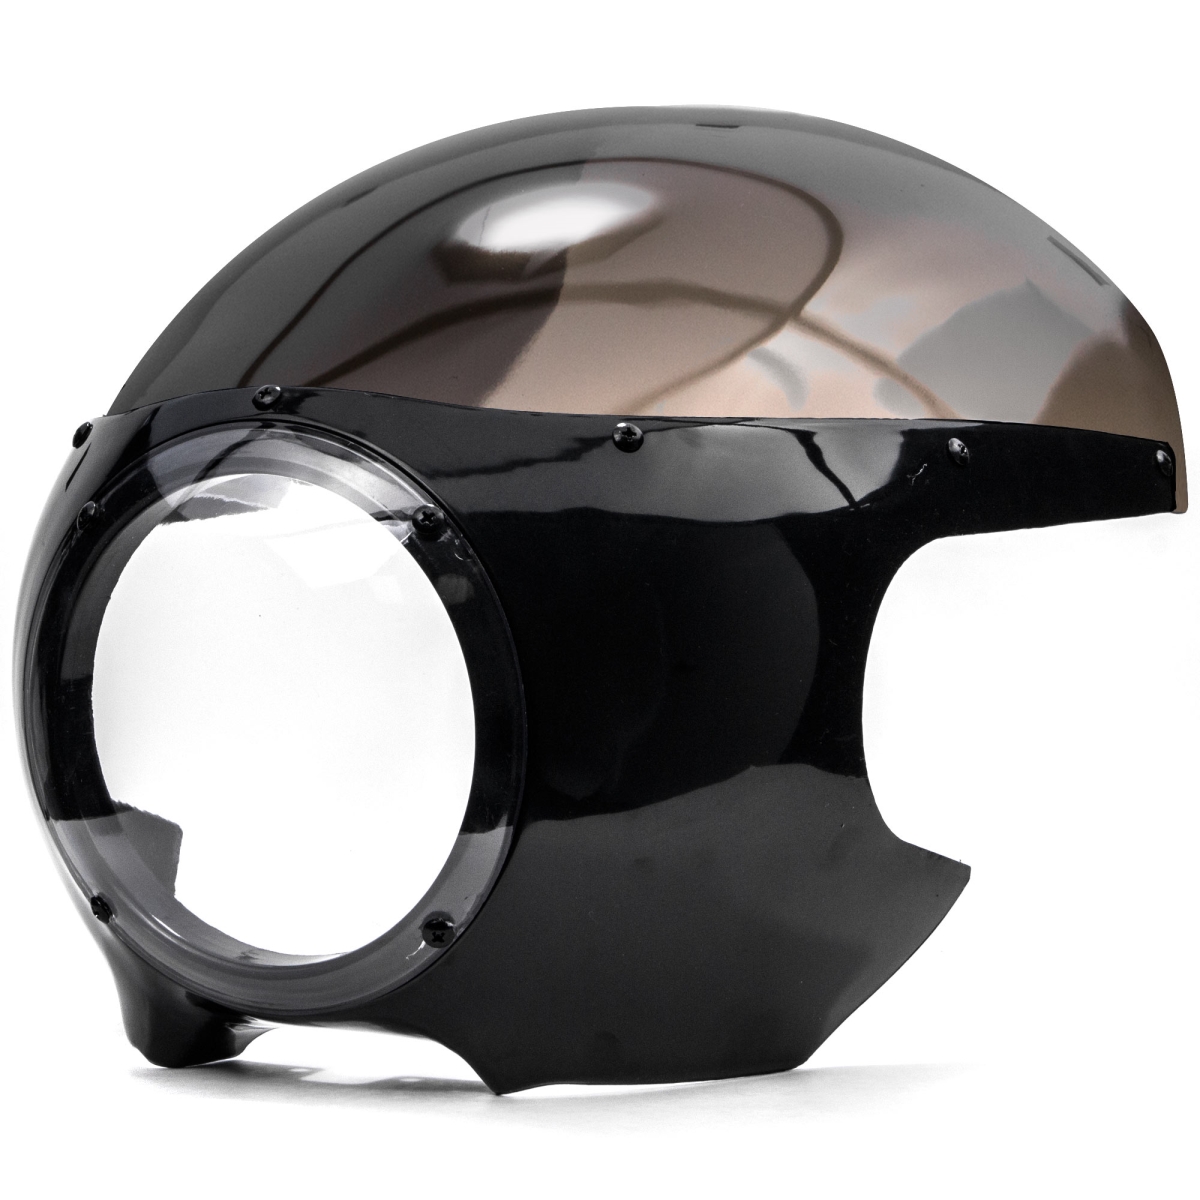 Jbm-6003-2 5.75 In. Motorcycle Headlight Fairing Screen Retro Cafe Racer Drag, Black & Smoke